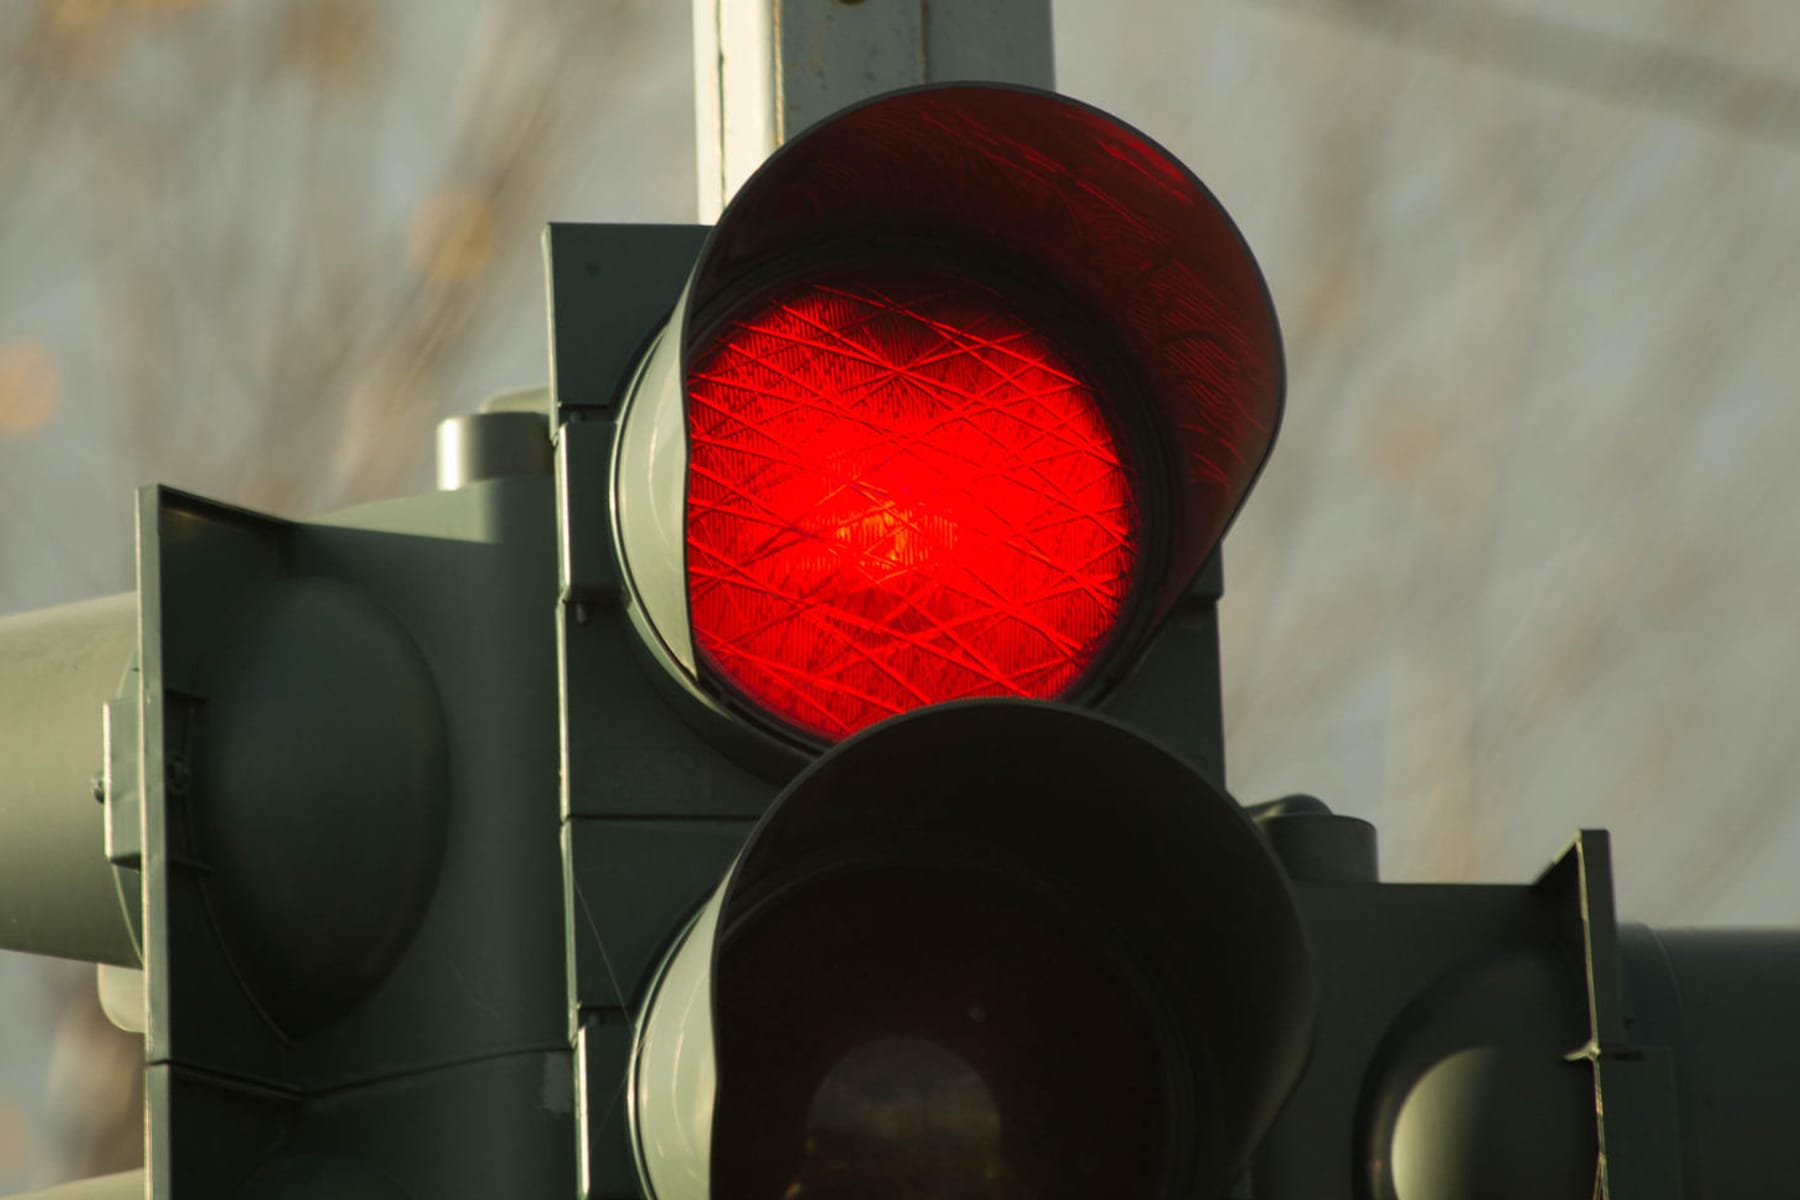 Grüner Pfeil an roter Ampel – anhalten oder fahren? So verhalten